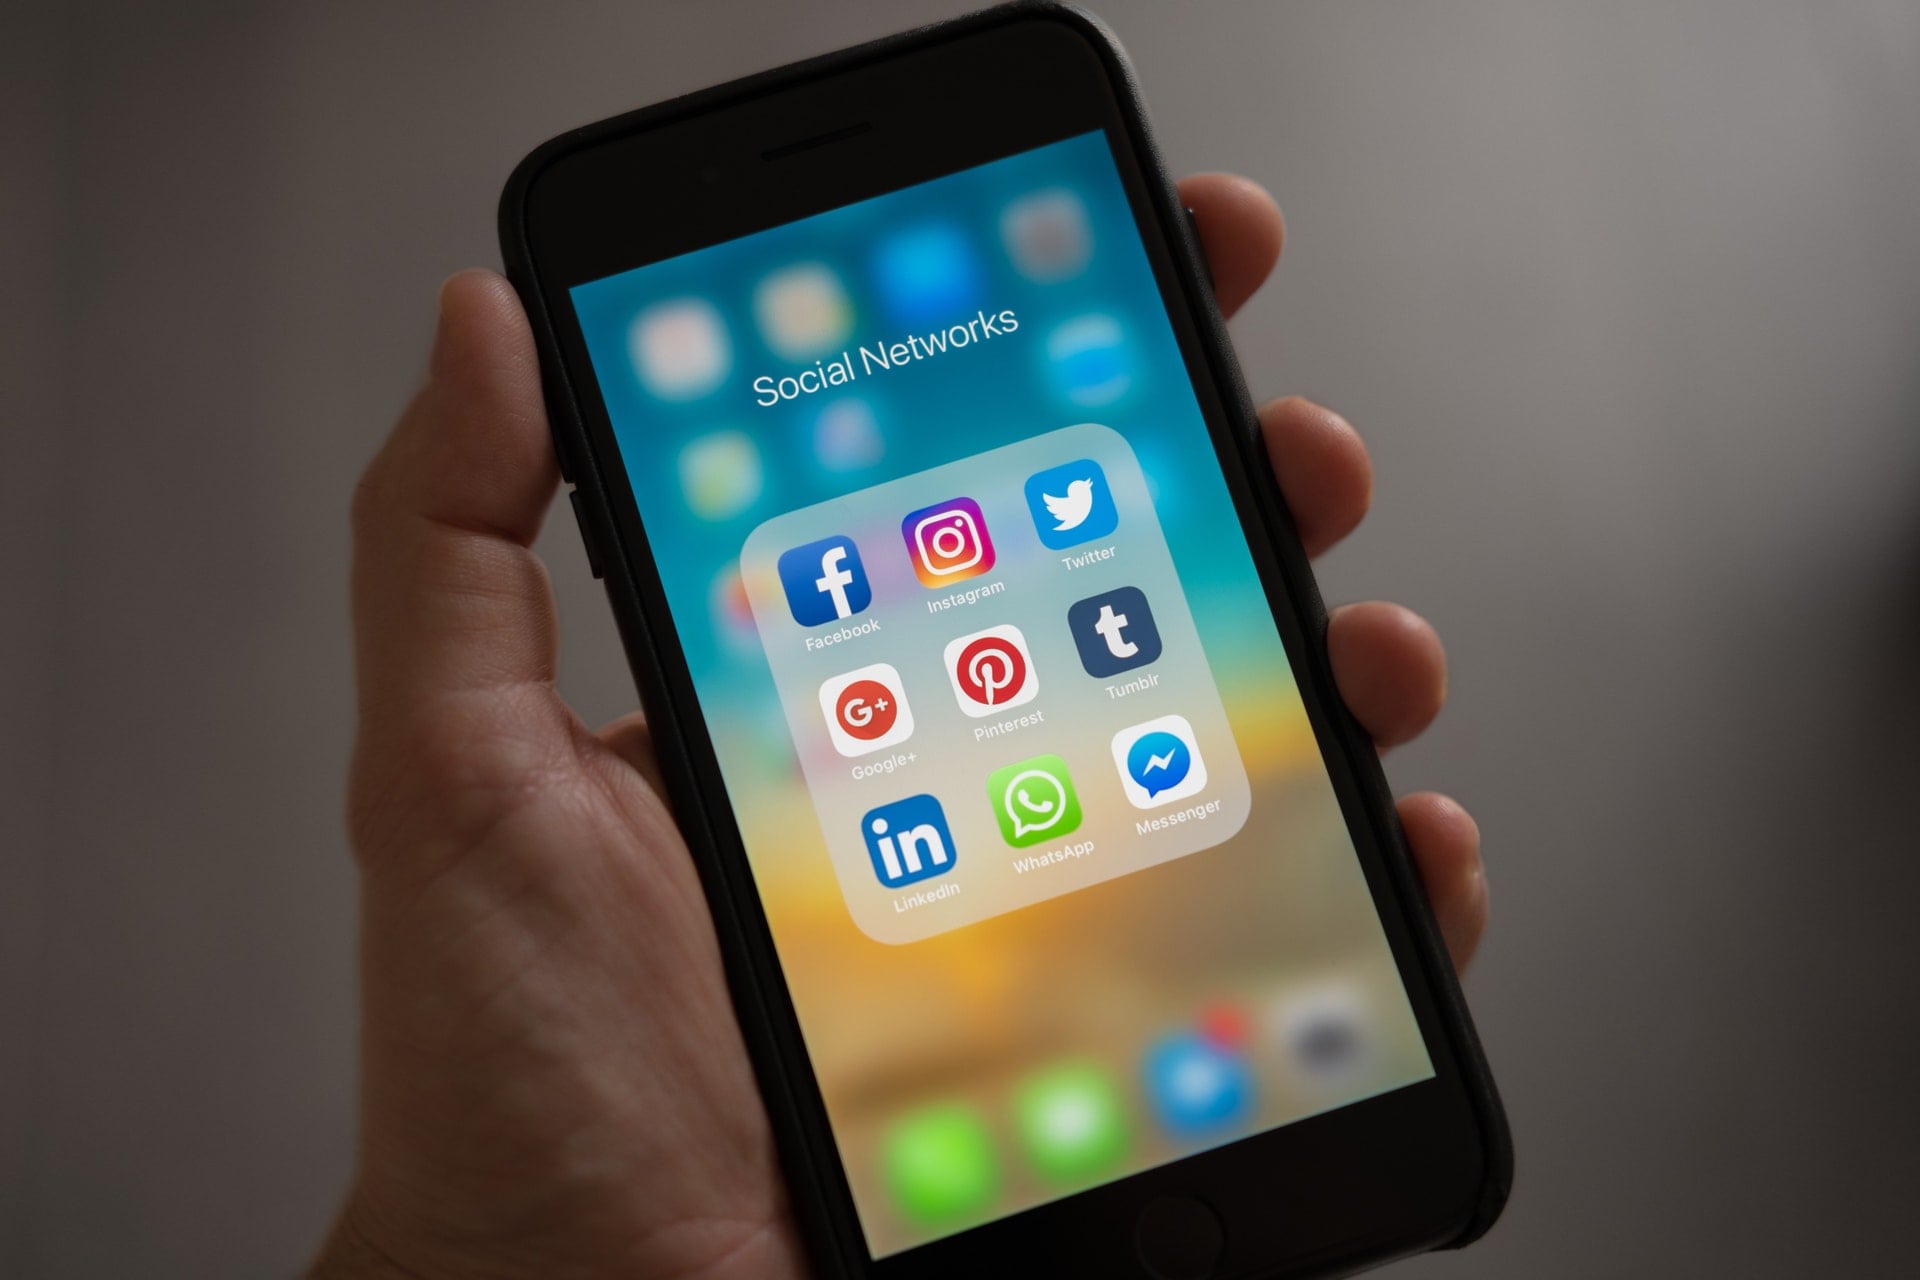 Social Media Marketing Apps on mobile device